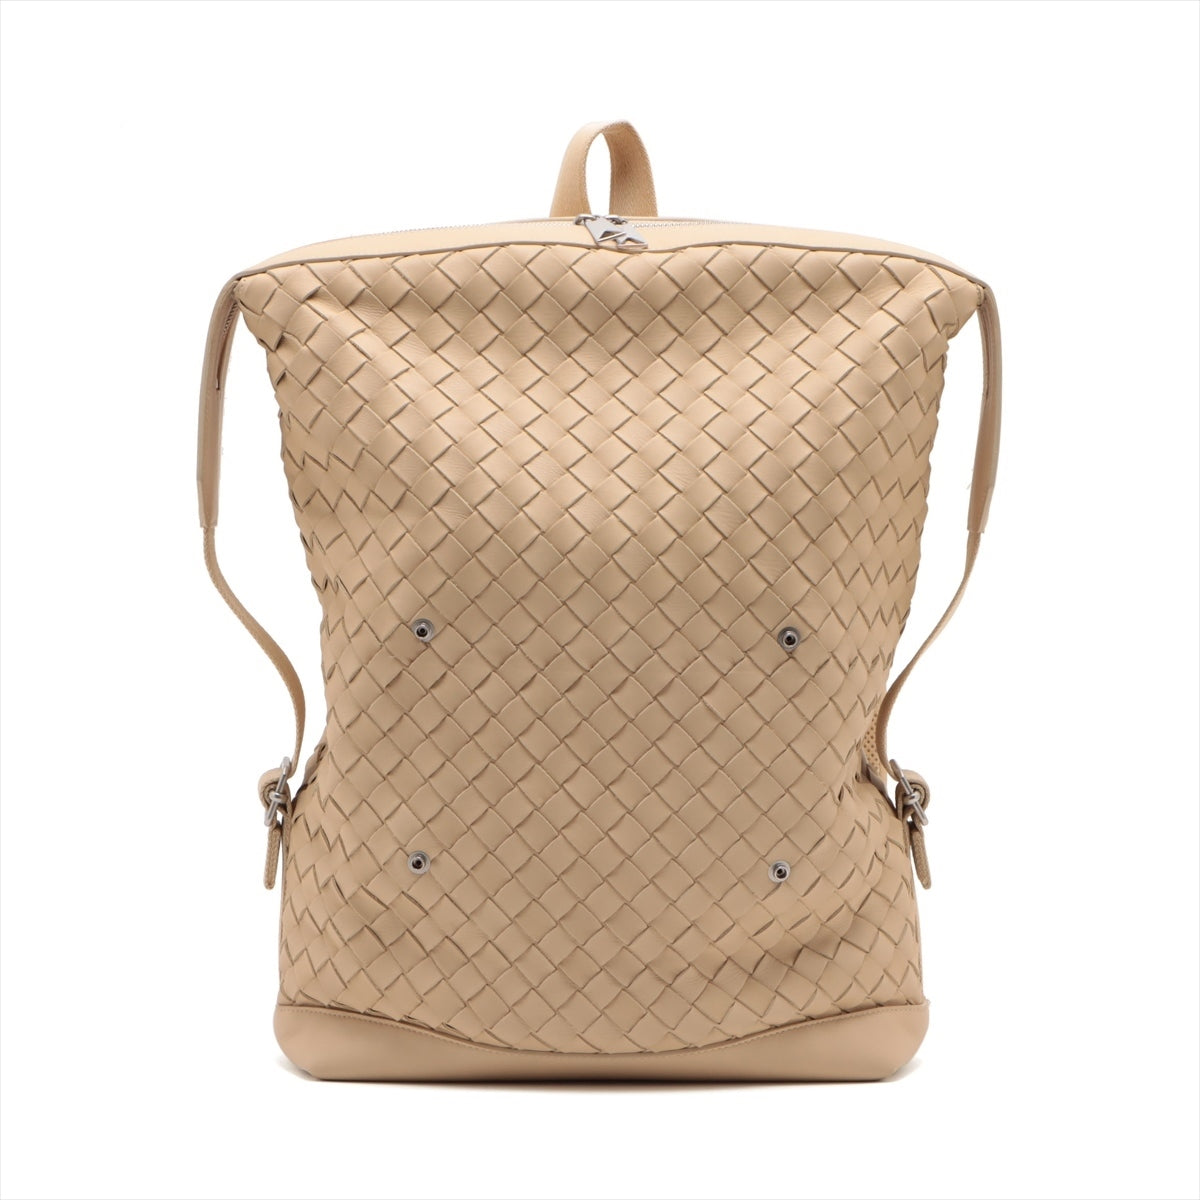 Bottega Veneta Intrecciato Classic Leather Backpack Beige